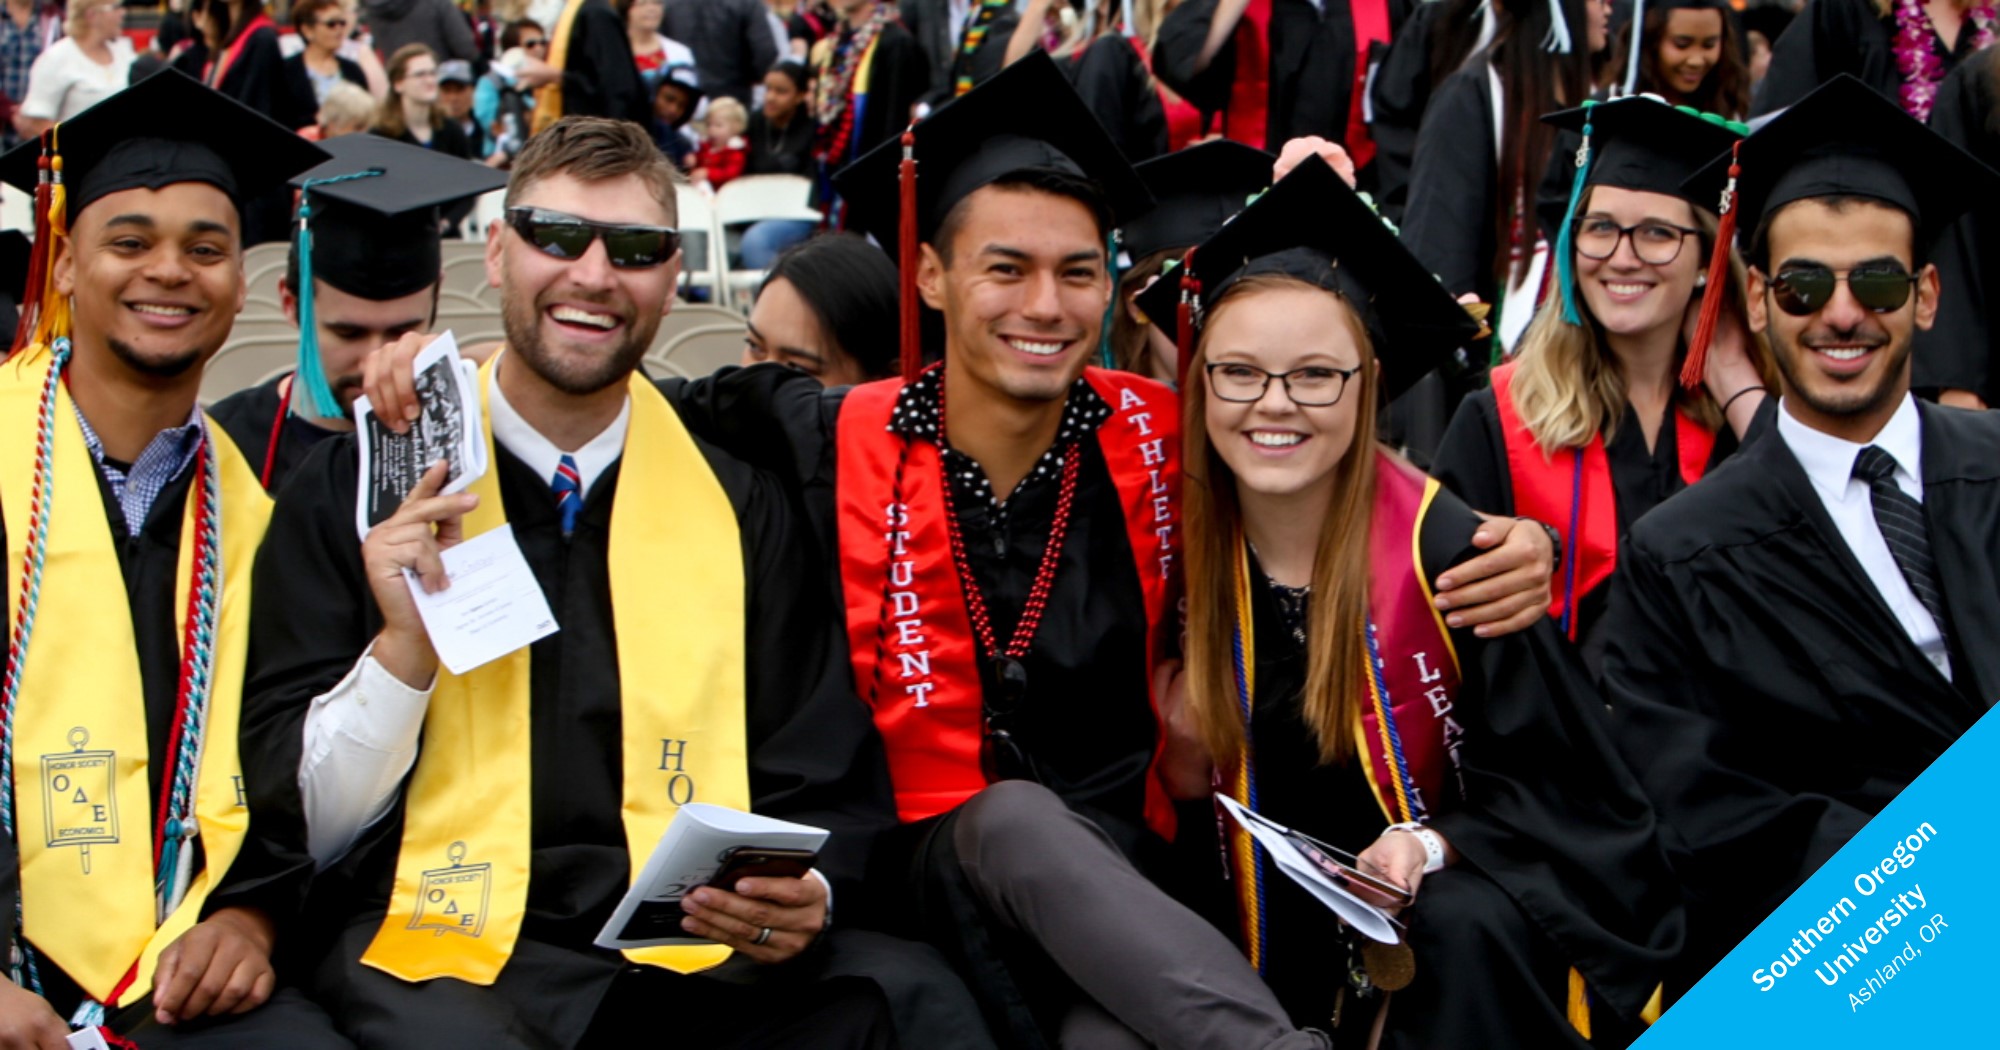 Group of Southern Oregon University smiling graduates